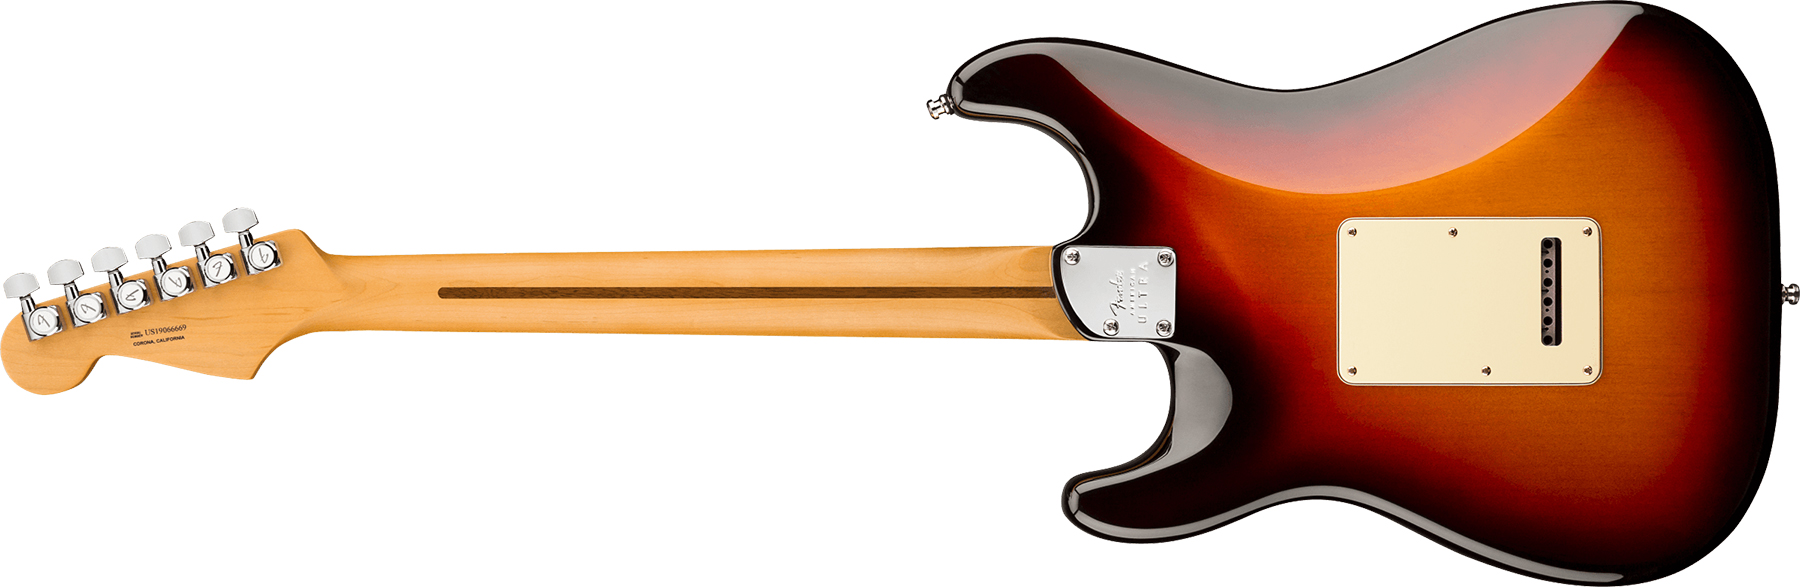 Fender Strat American Ultra Hss 2019 Usa Mn - Ultraburst - Str shape electric guitar - Variation 1